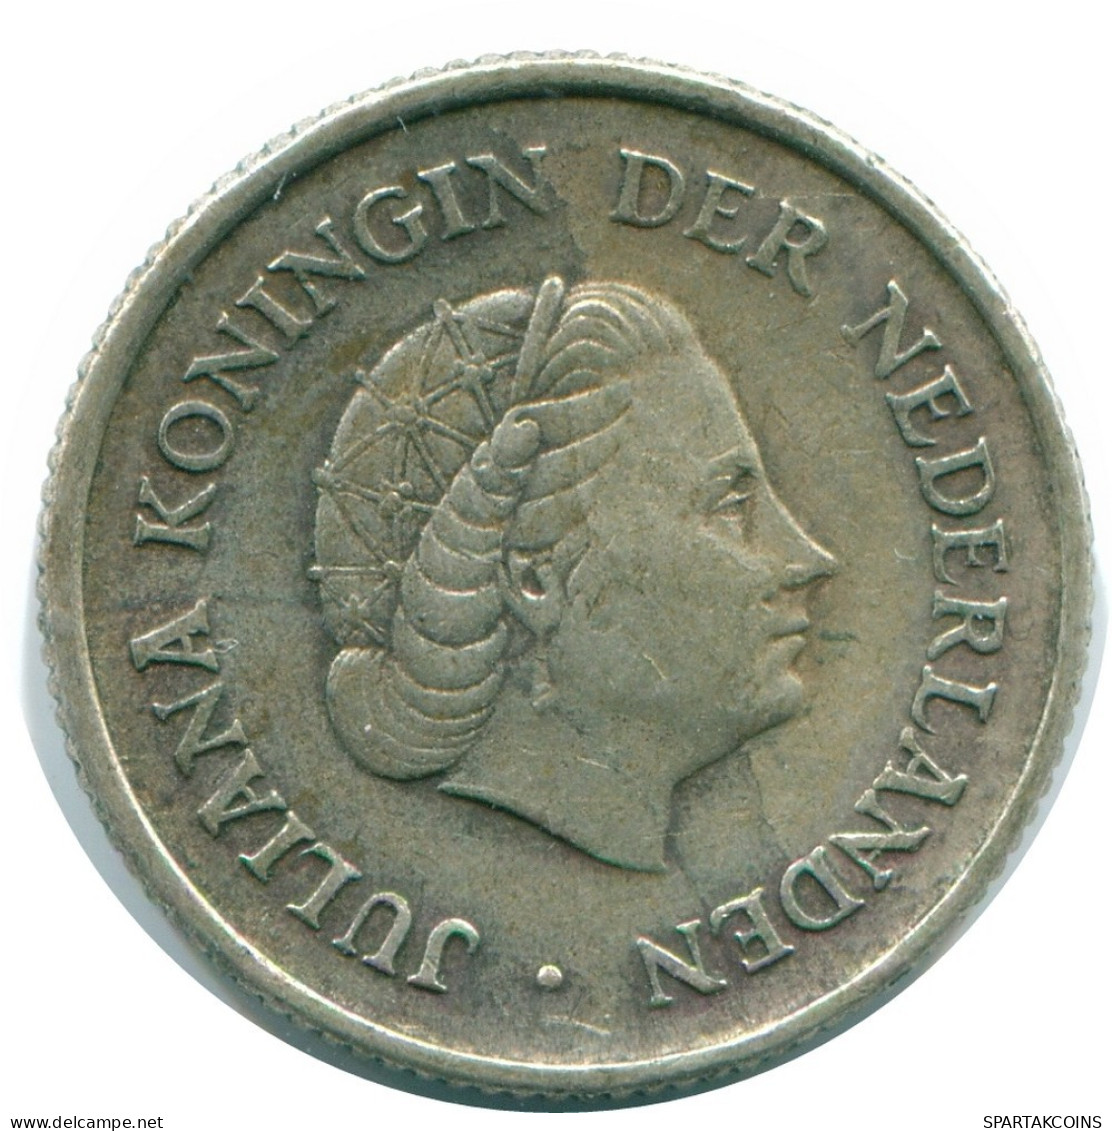 1/4 GULDEN 1965 NETHERLANDS ANTILLES SILVER Colonial Coin #NL11356.4.U.A - Netherlands Antilles